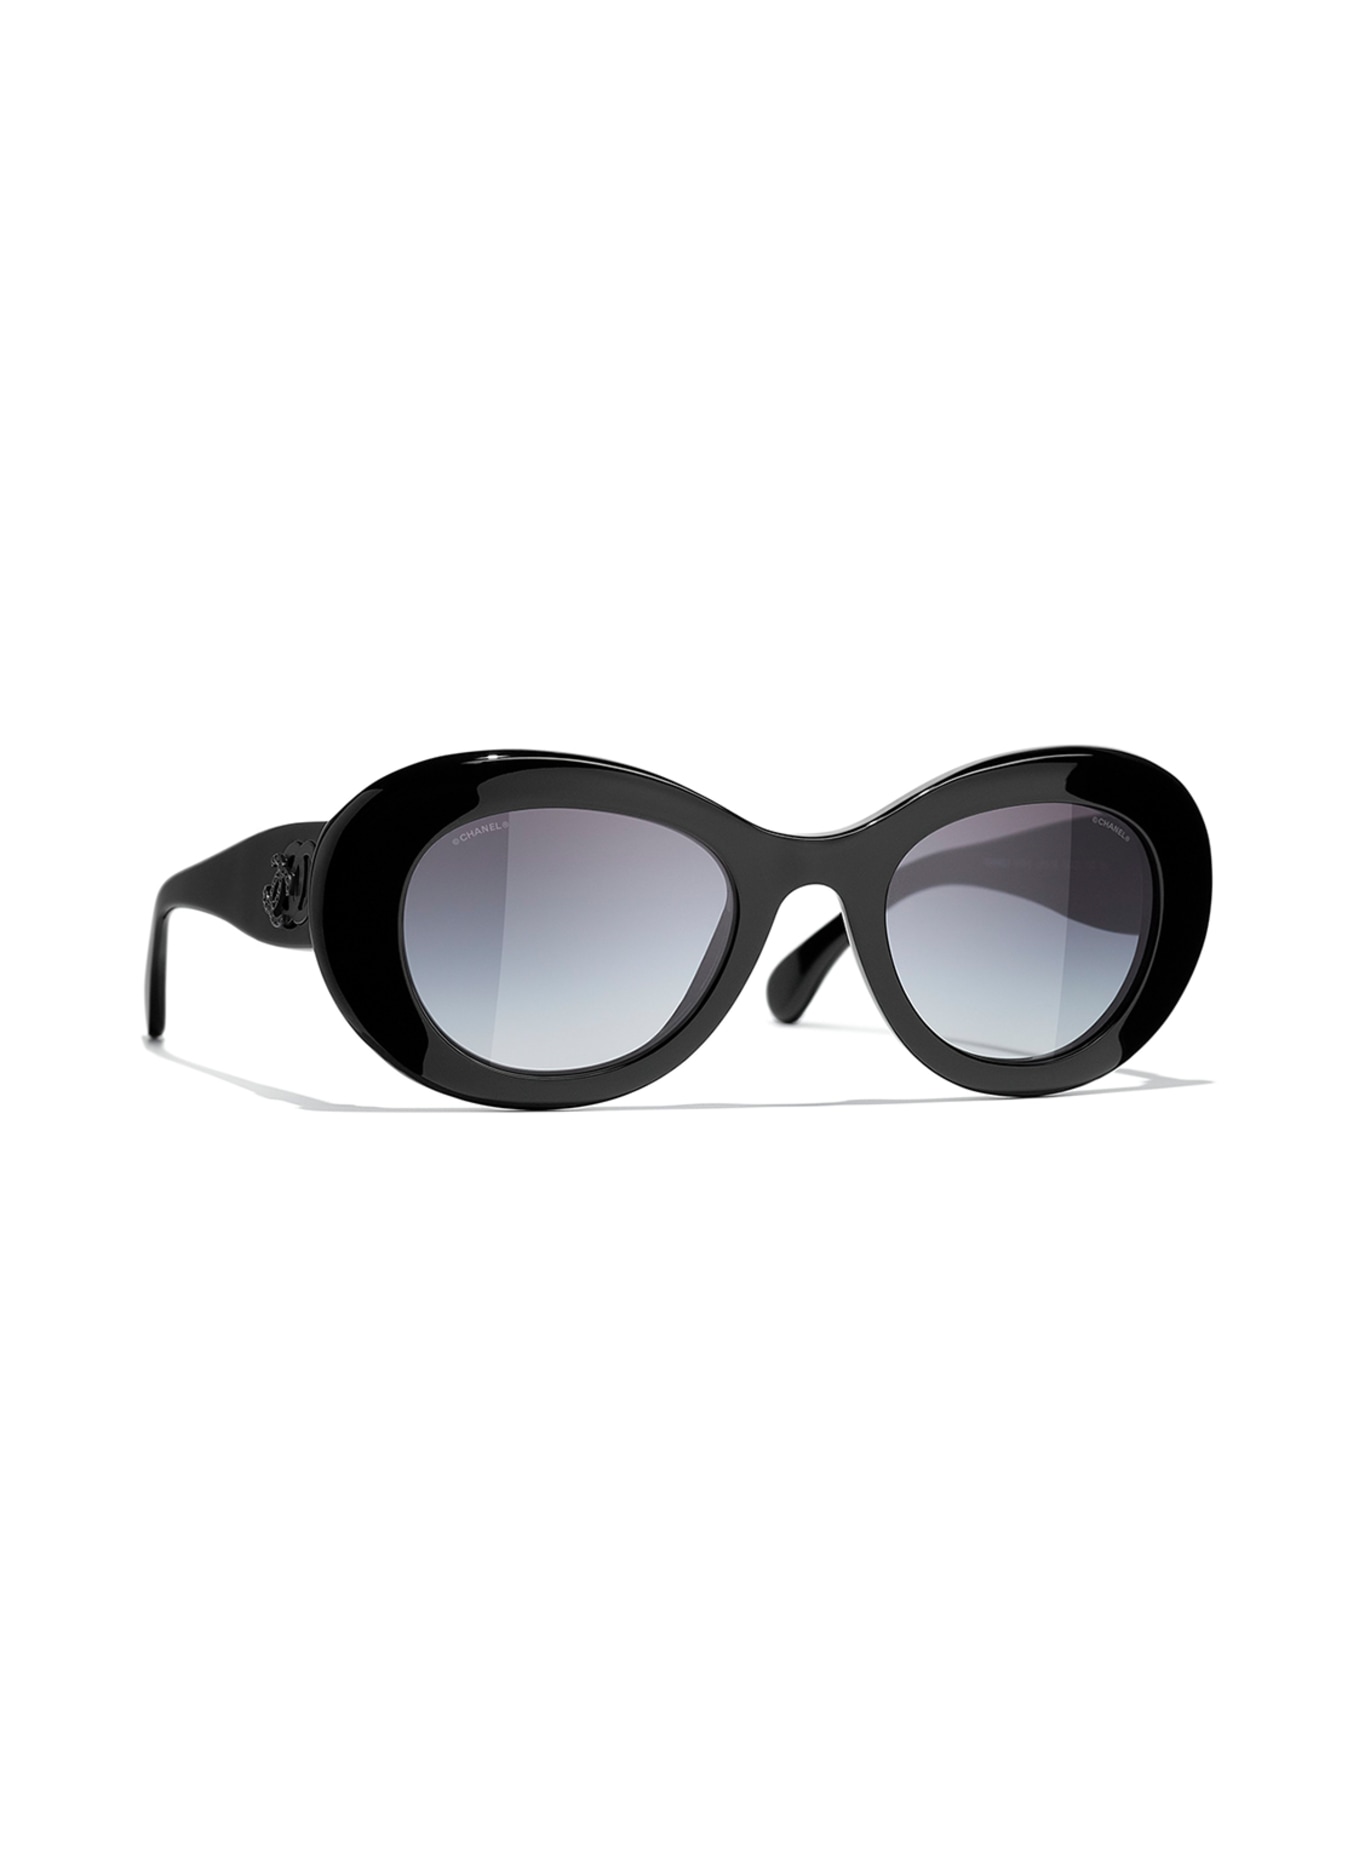 CHANEL Round sunglasses in c888s6 - black/ gray gradient